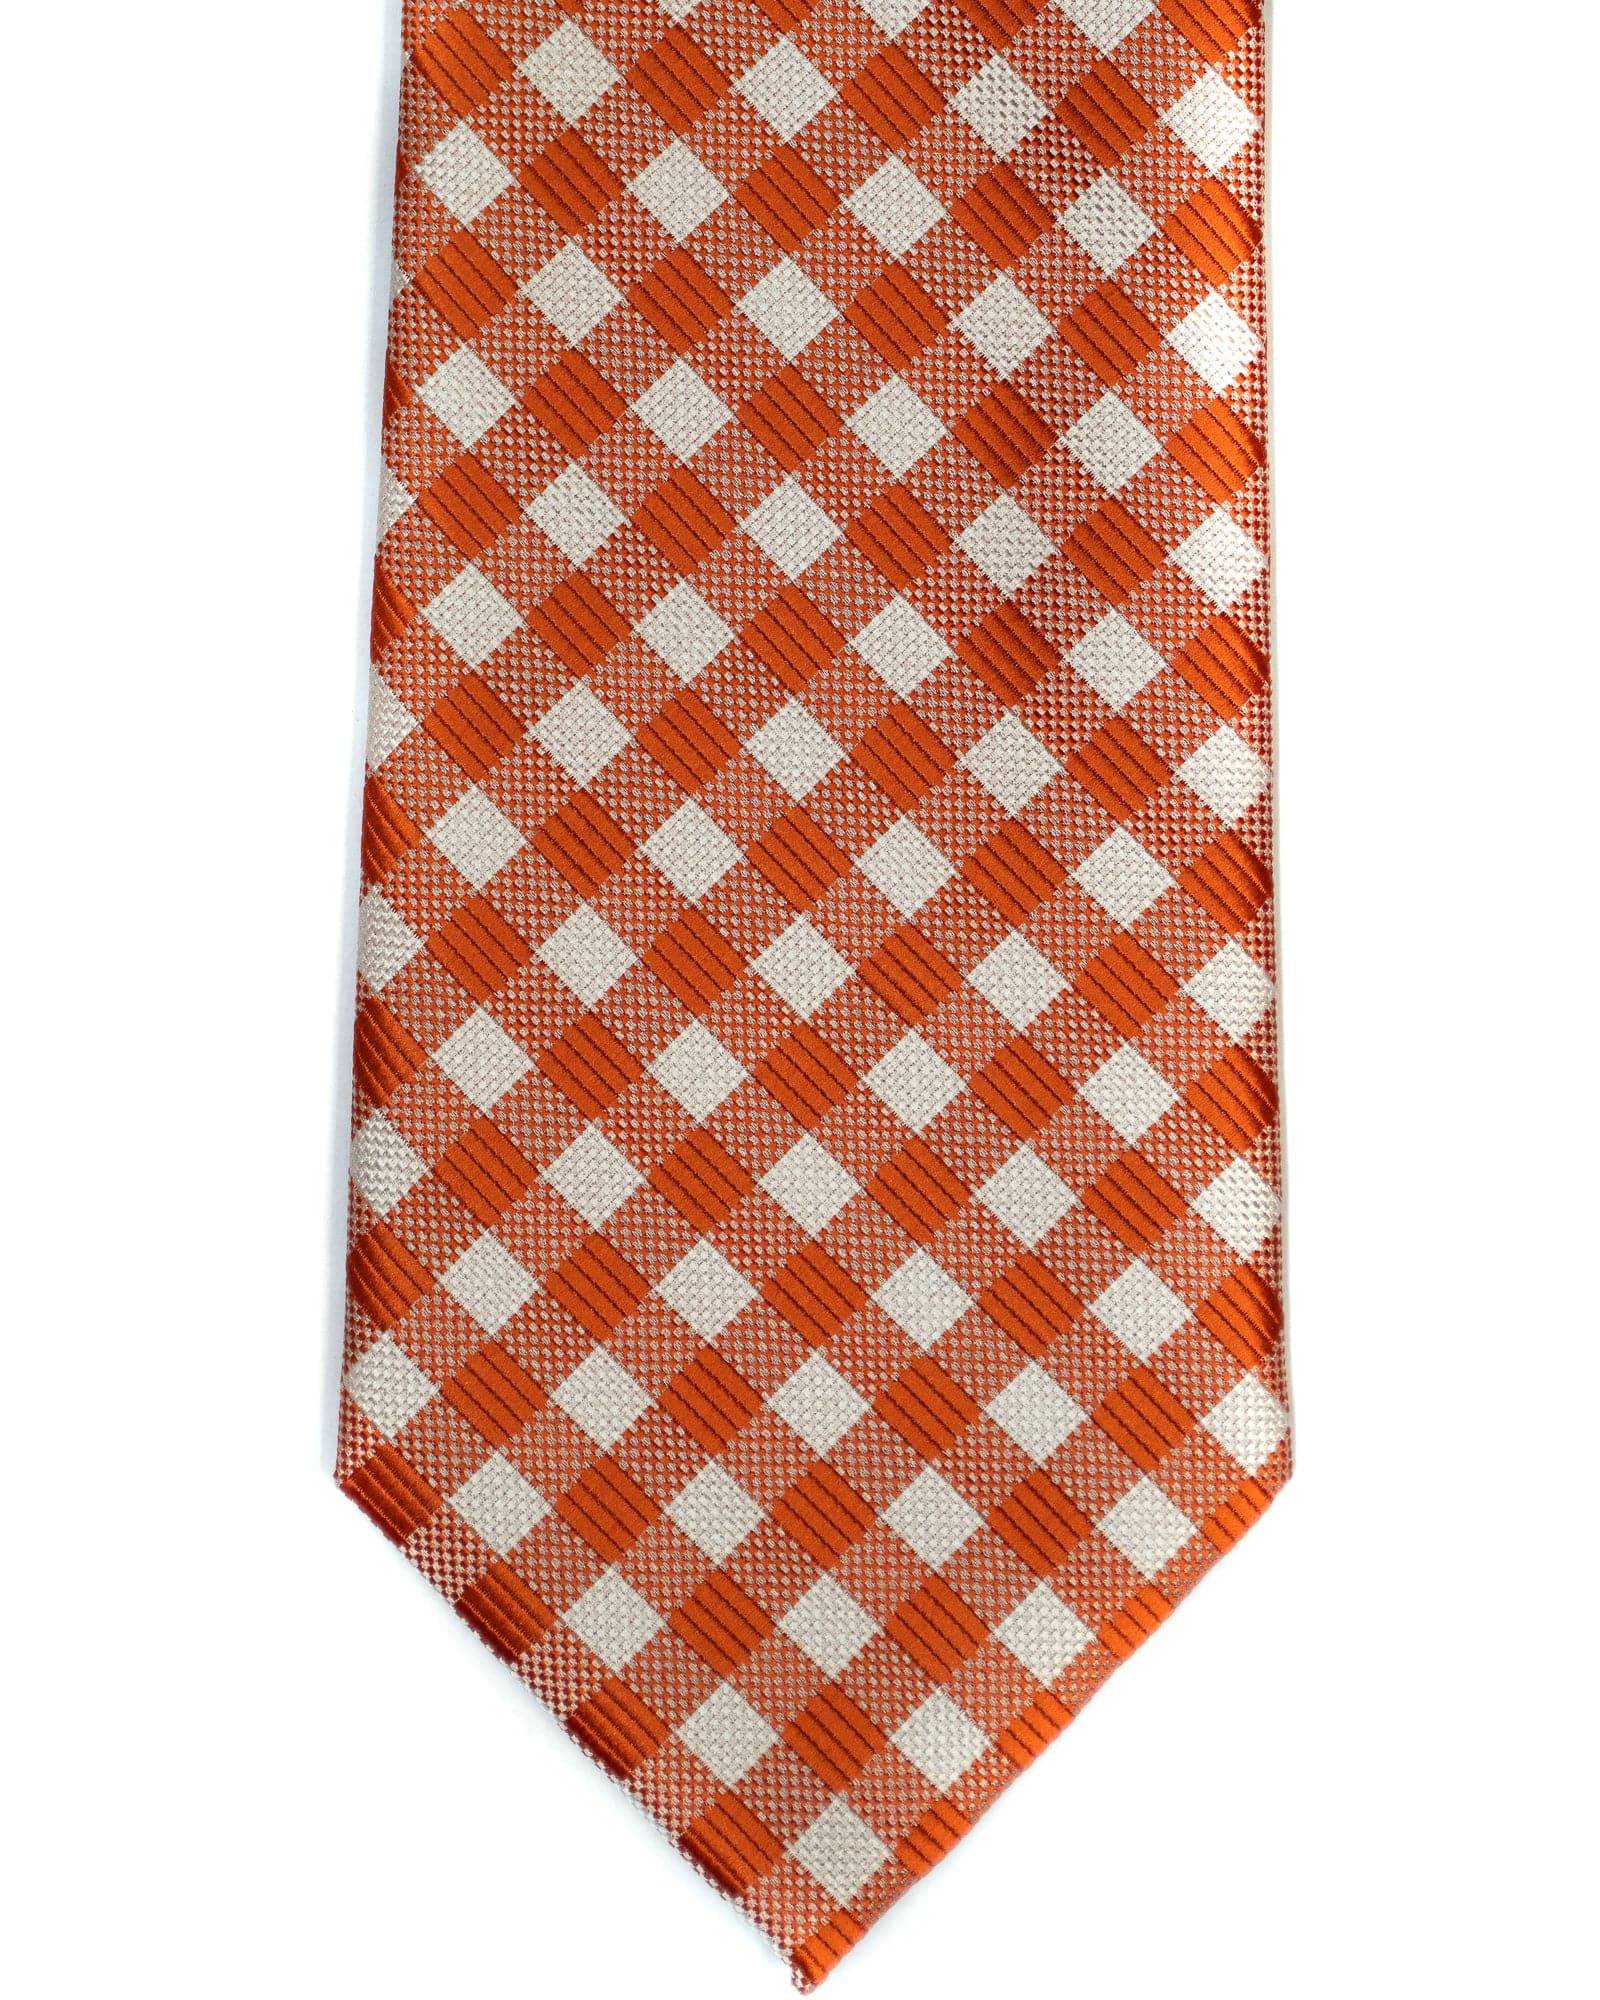 Imani Uomo Diamond Tie in Orange with White - Rainwater's Men's Clothing and Tuxedo Rental